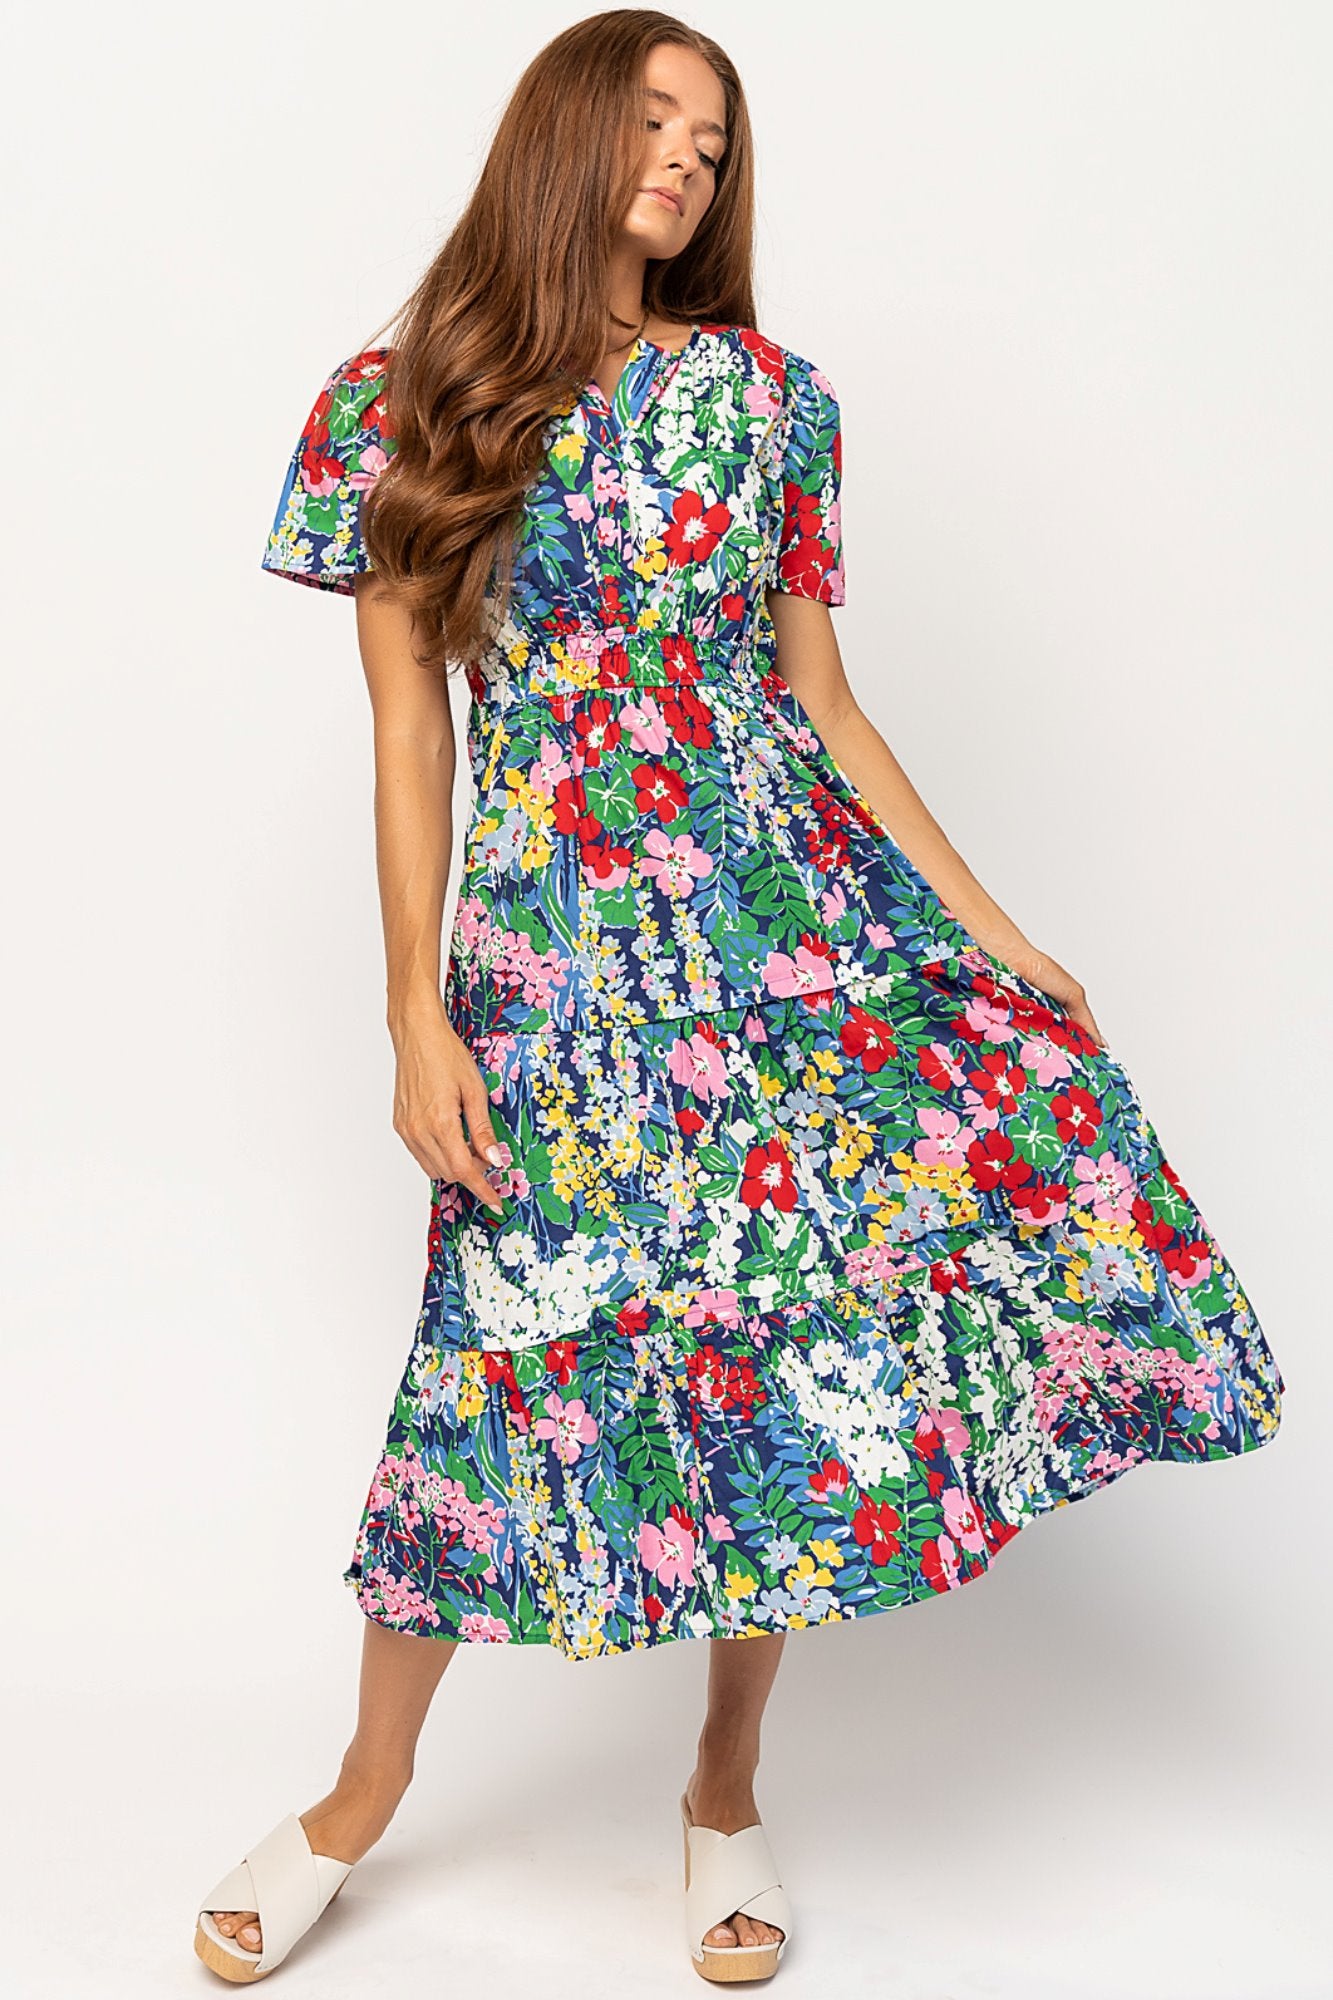 Roseland Dress (Small-3X) Holley Girl 